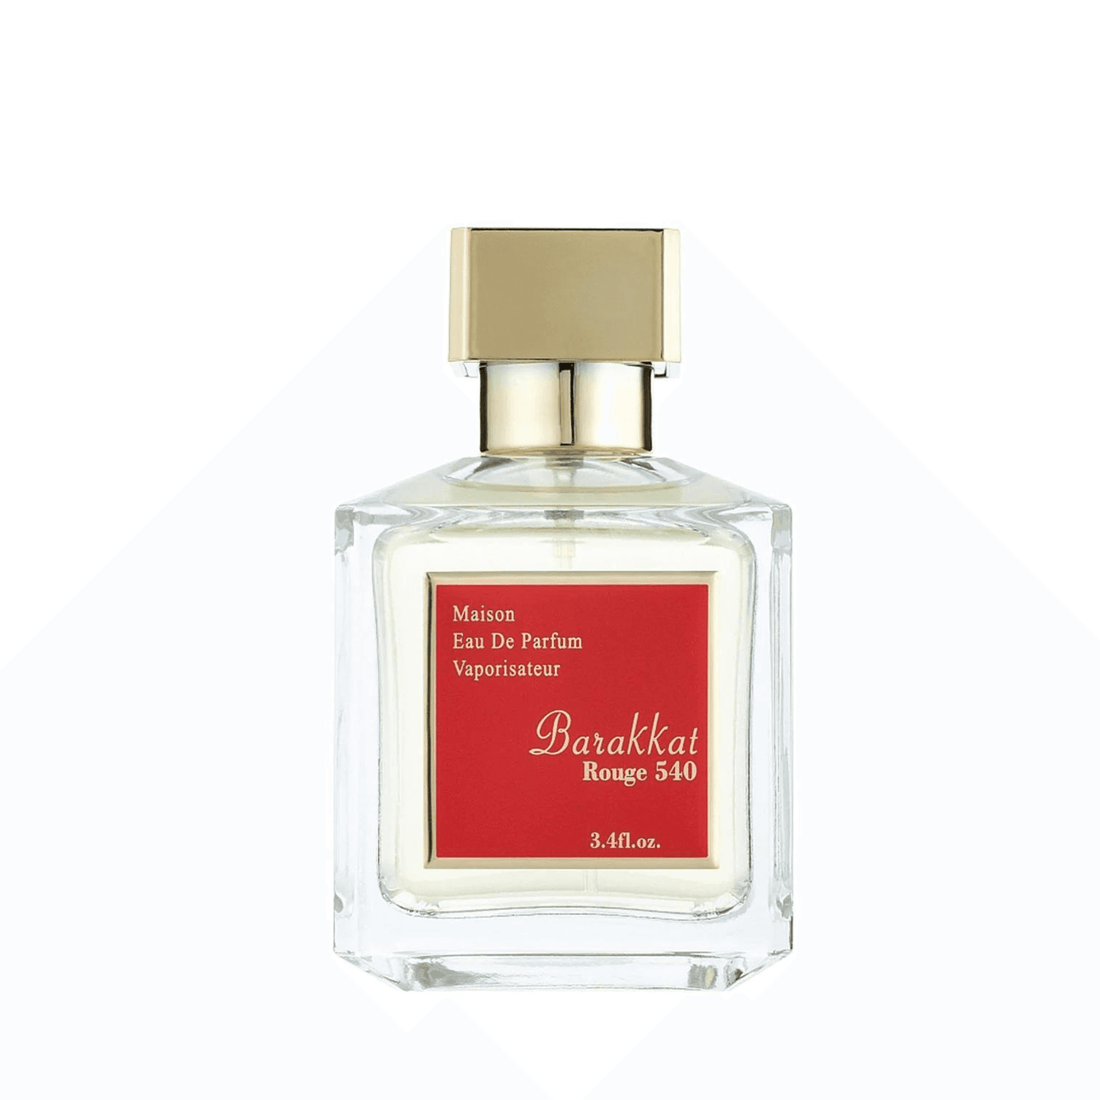 Barakkat Rouge 540 | Eau de Parfum 100ml - Women's Premium Parfum Gift